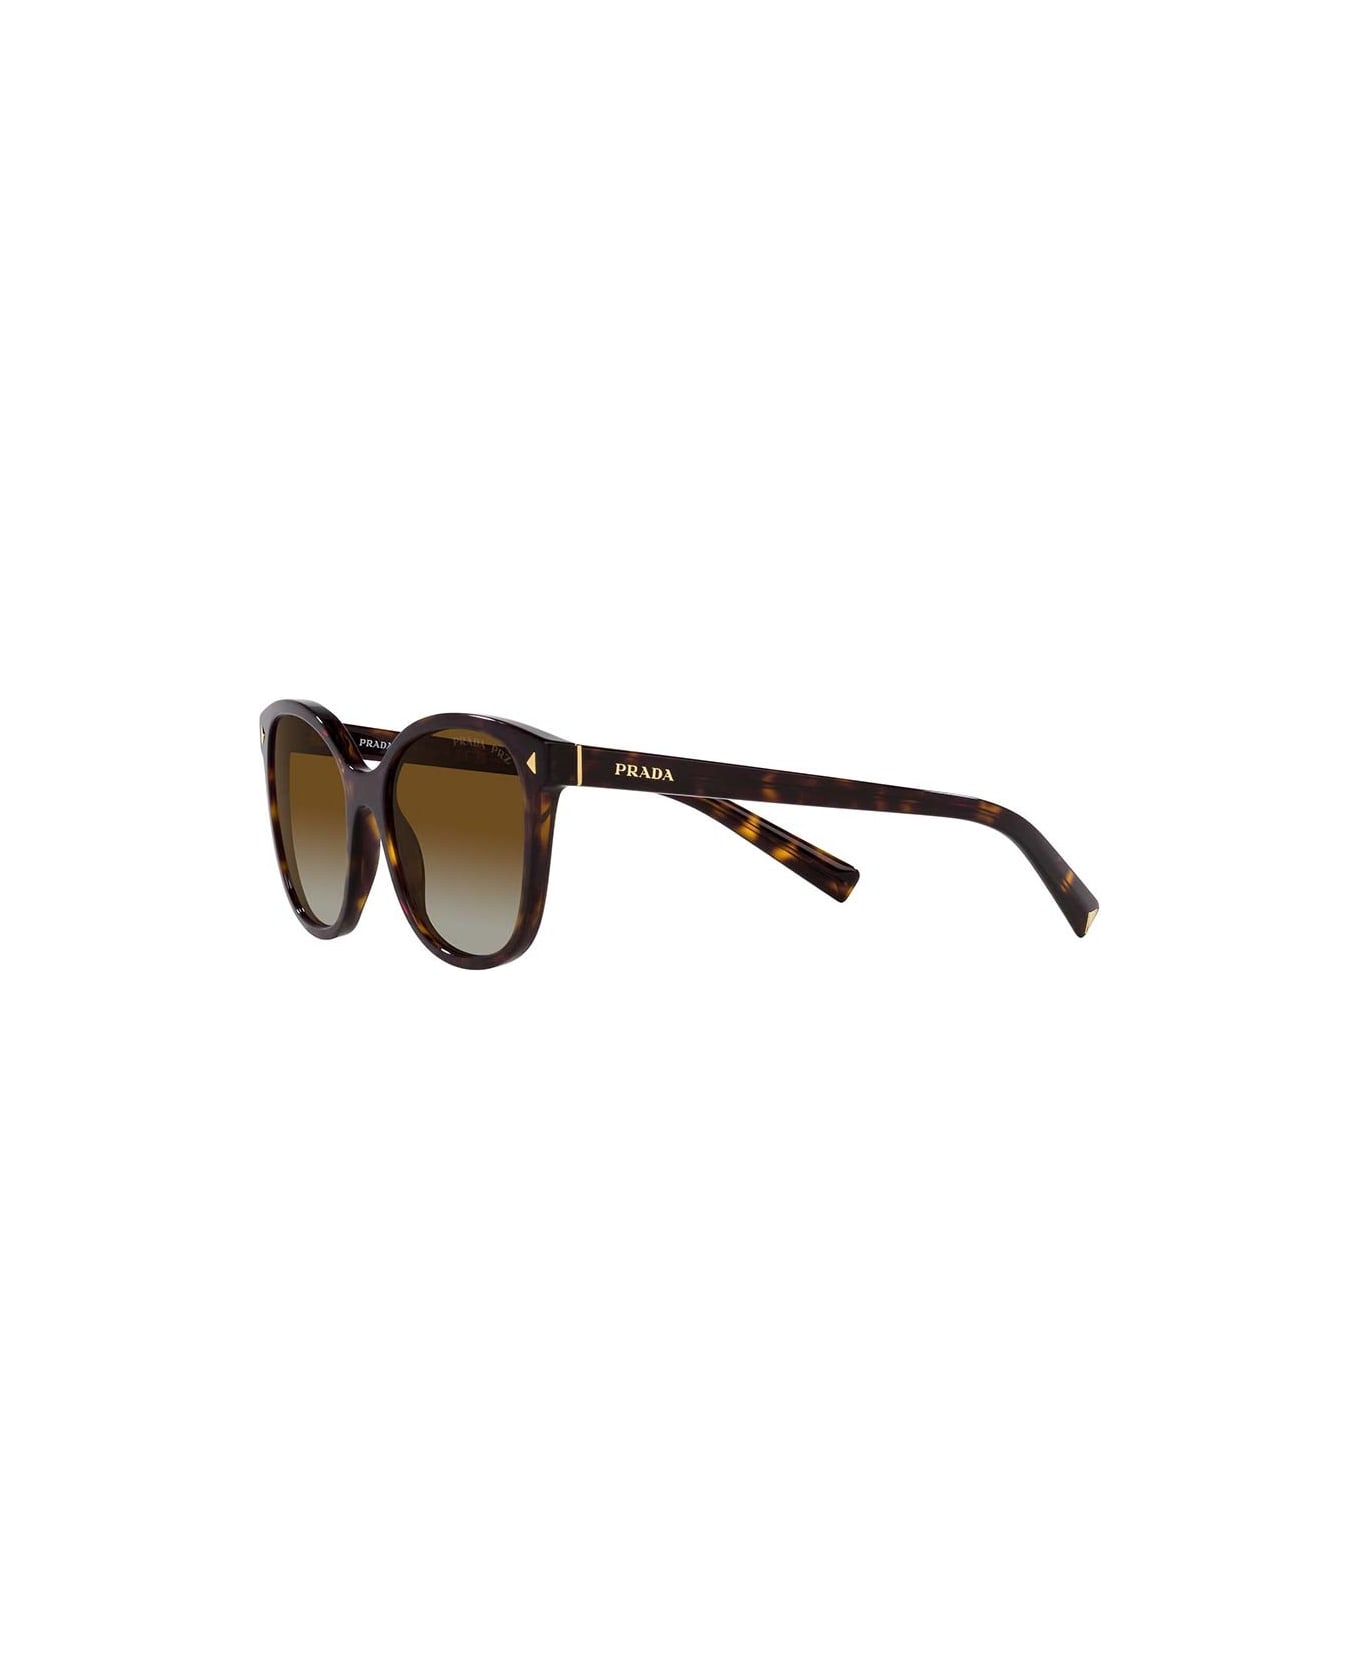 Prada Eyewear Sunglasses - 2AU6E1